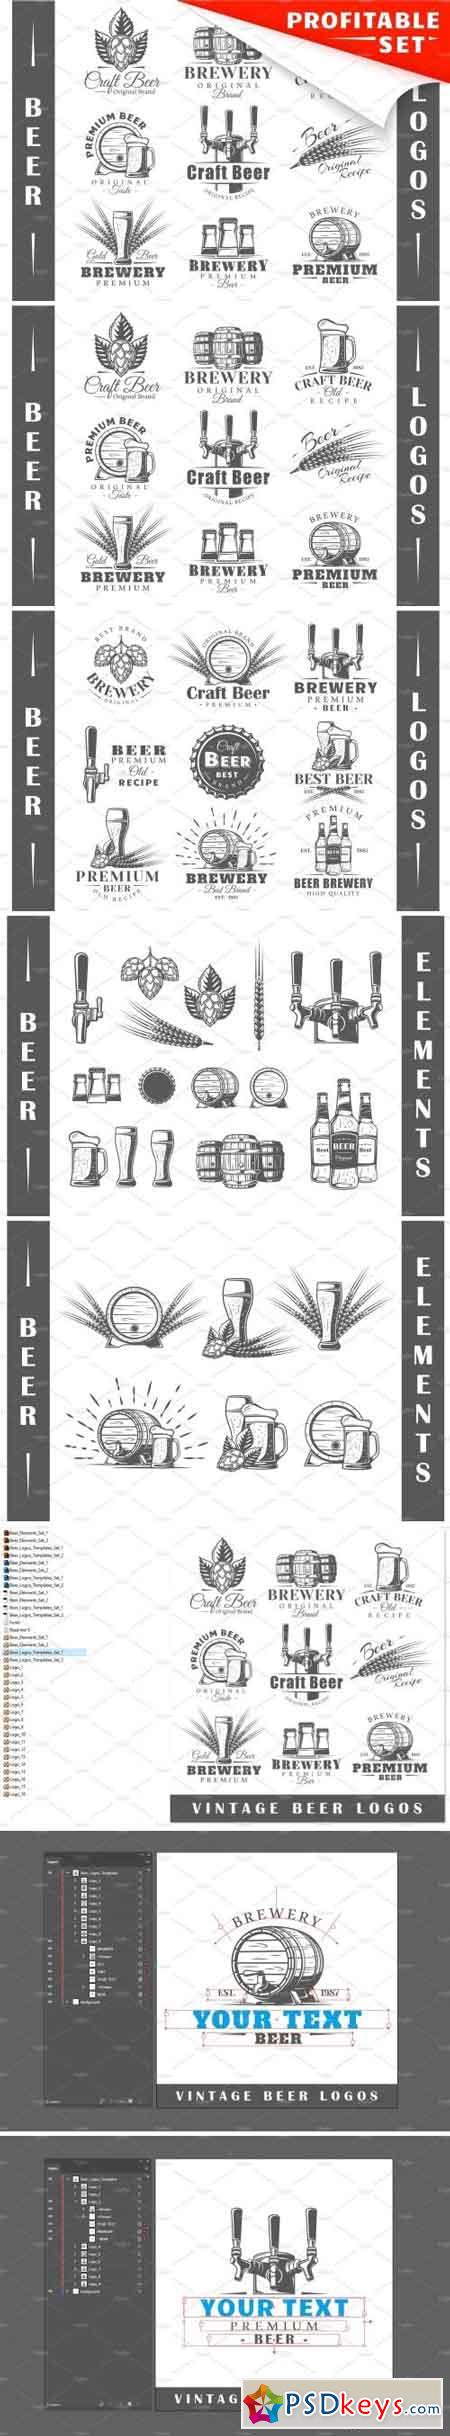 18 Beer Logos Templates 2142856